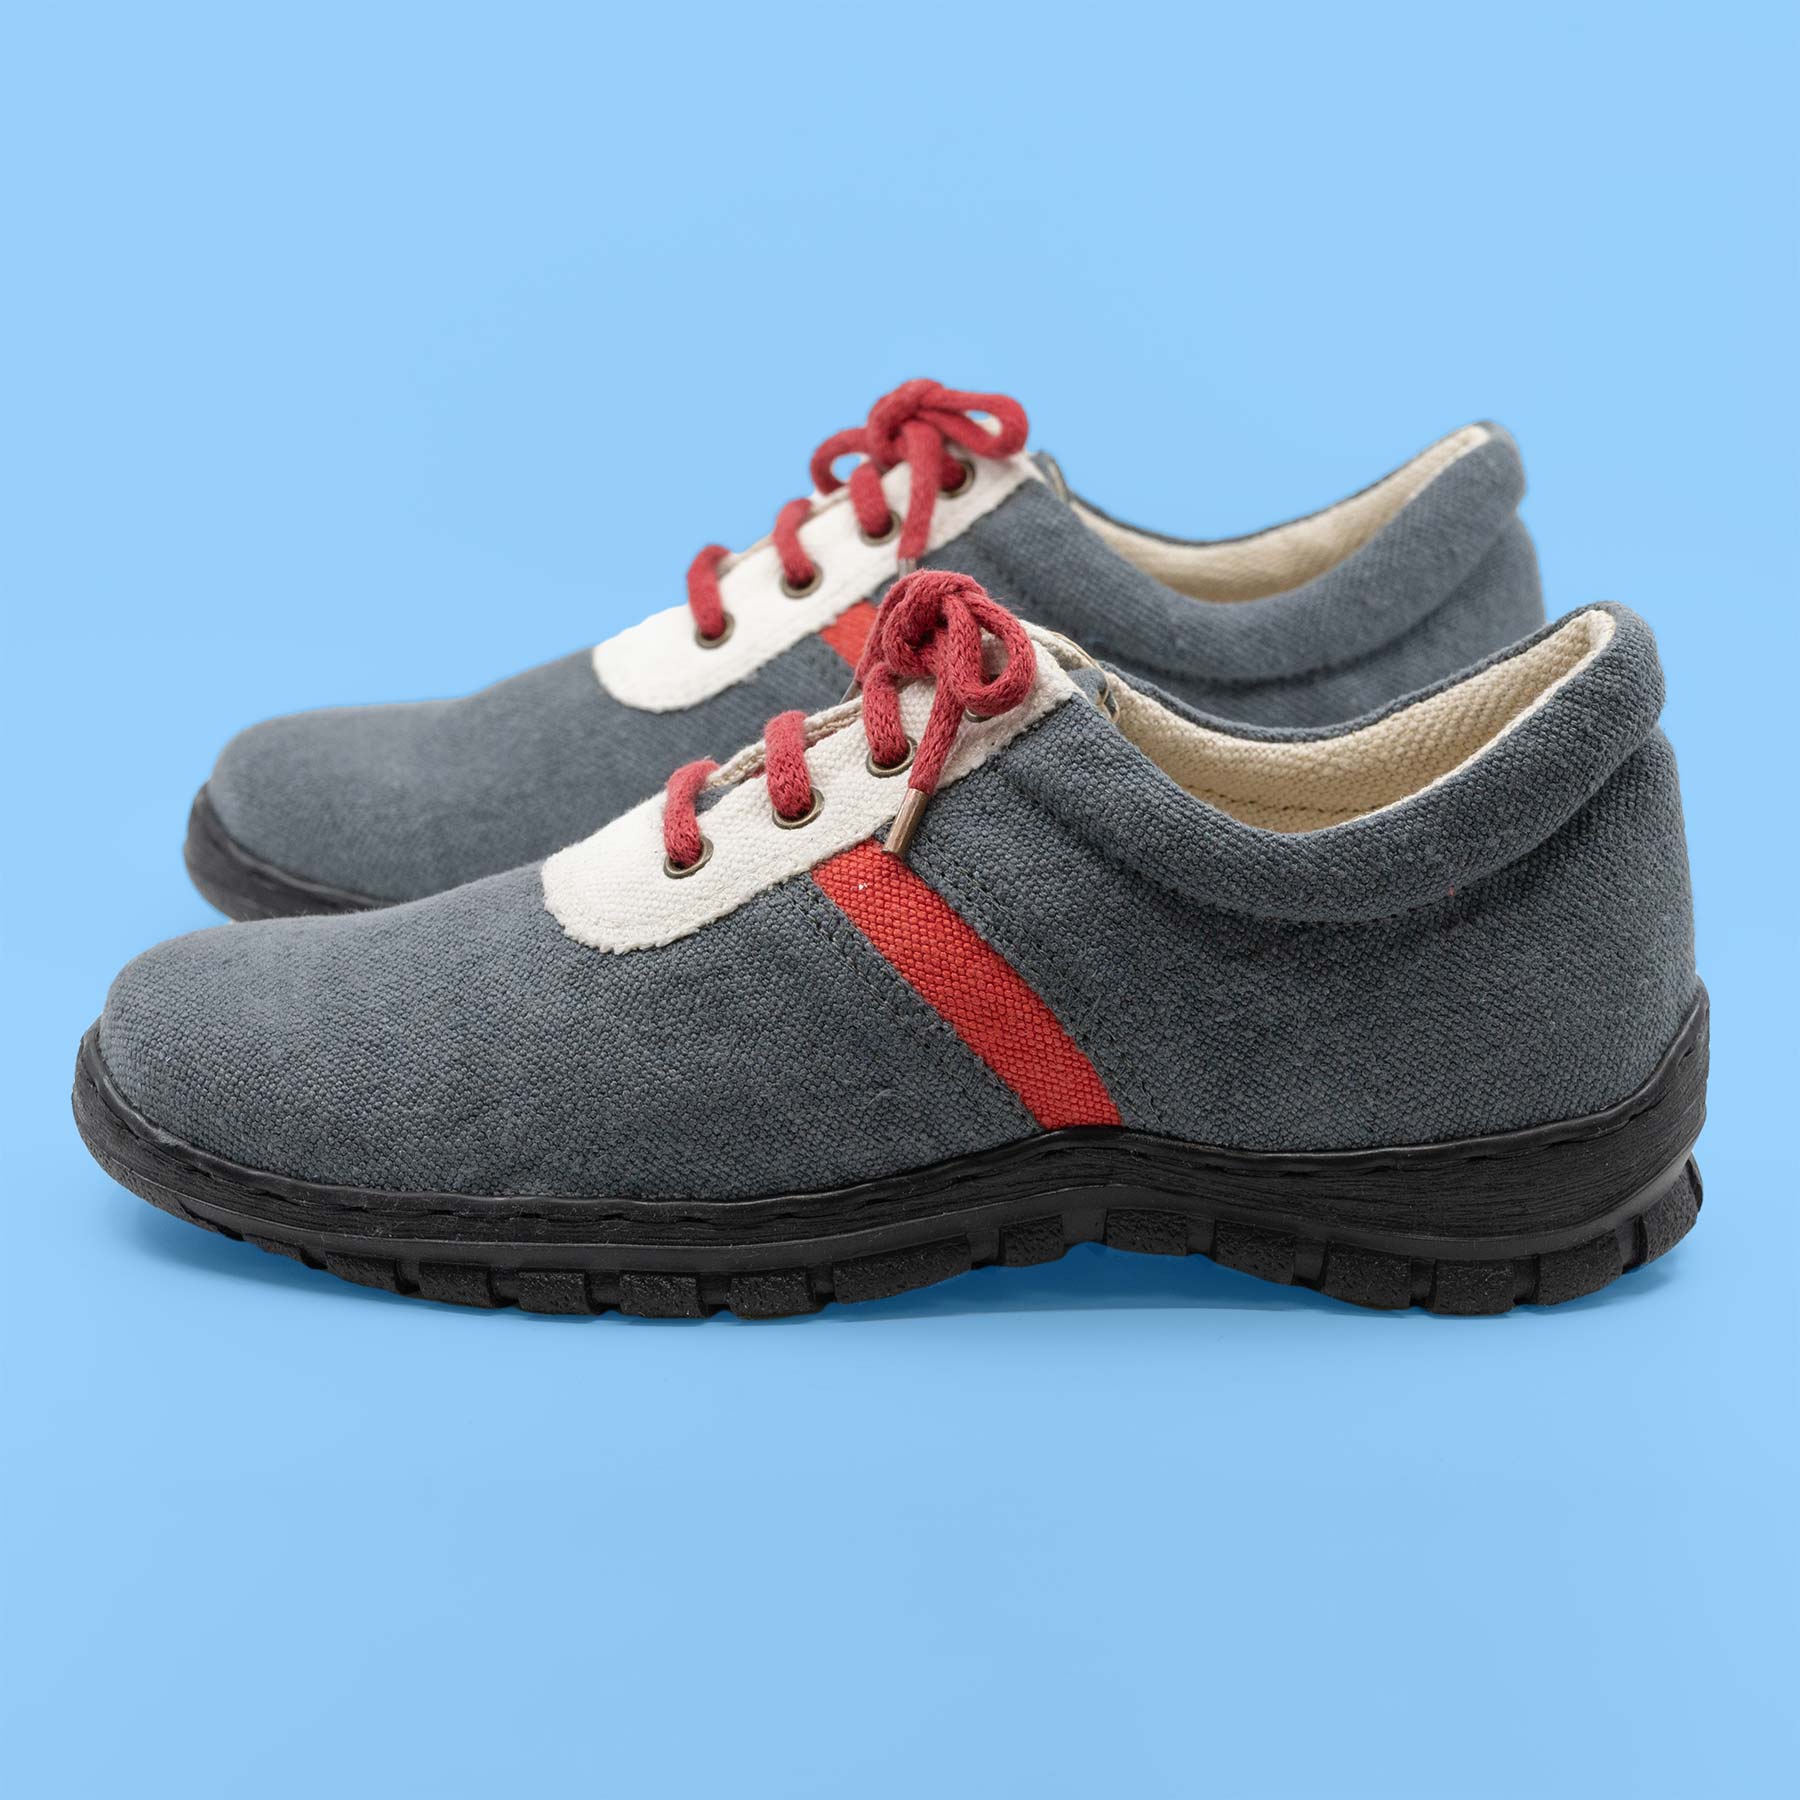 AMERICA Hemp Sports Shoes - Sneakers (Unisex)